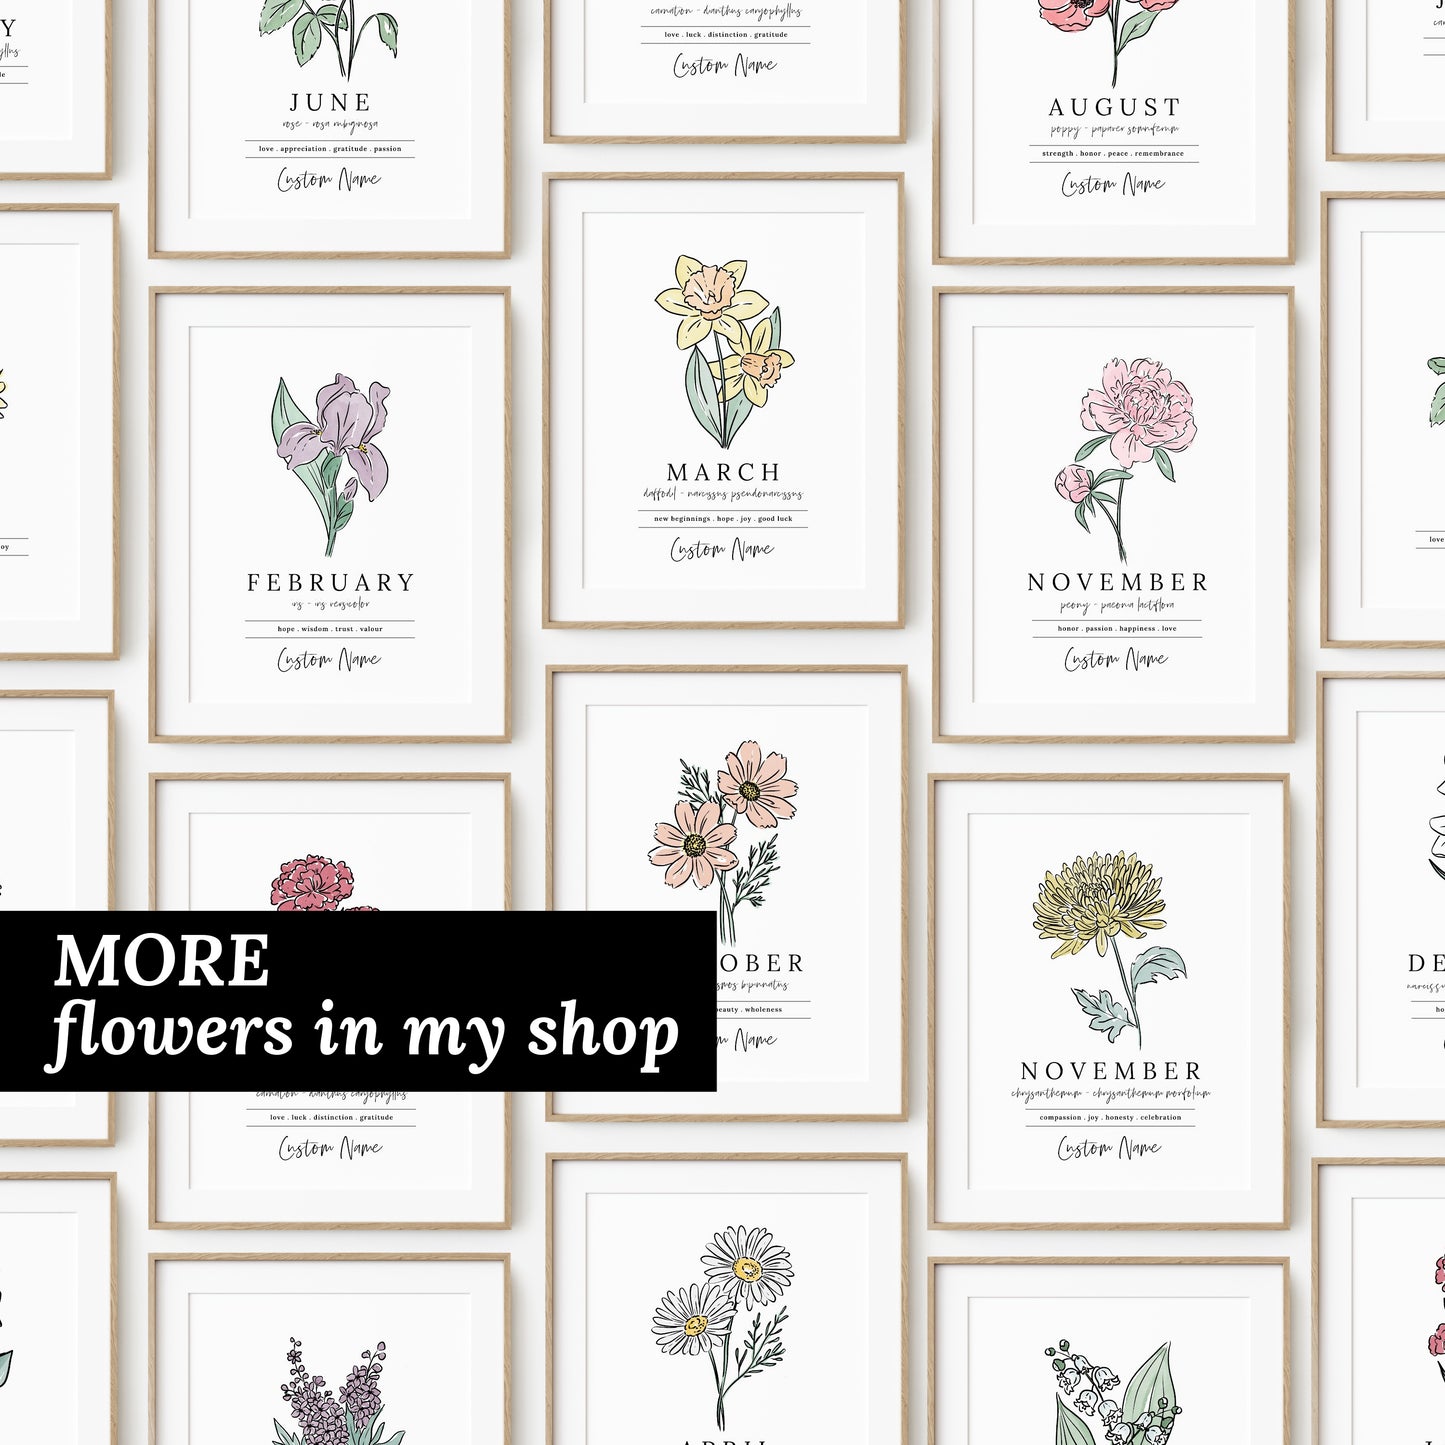 April Daisy Birth Flower Personalized Name Unframed Art Print | Custom Gift for Birthdays | Nursery Wall Decor | Floral Wall Decor